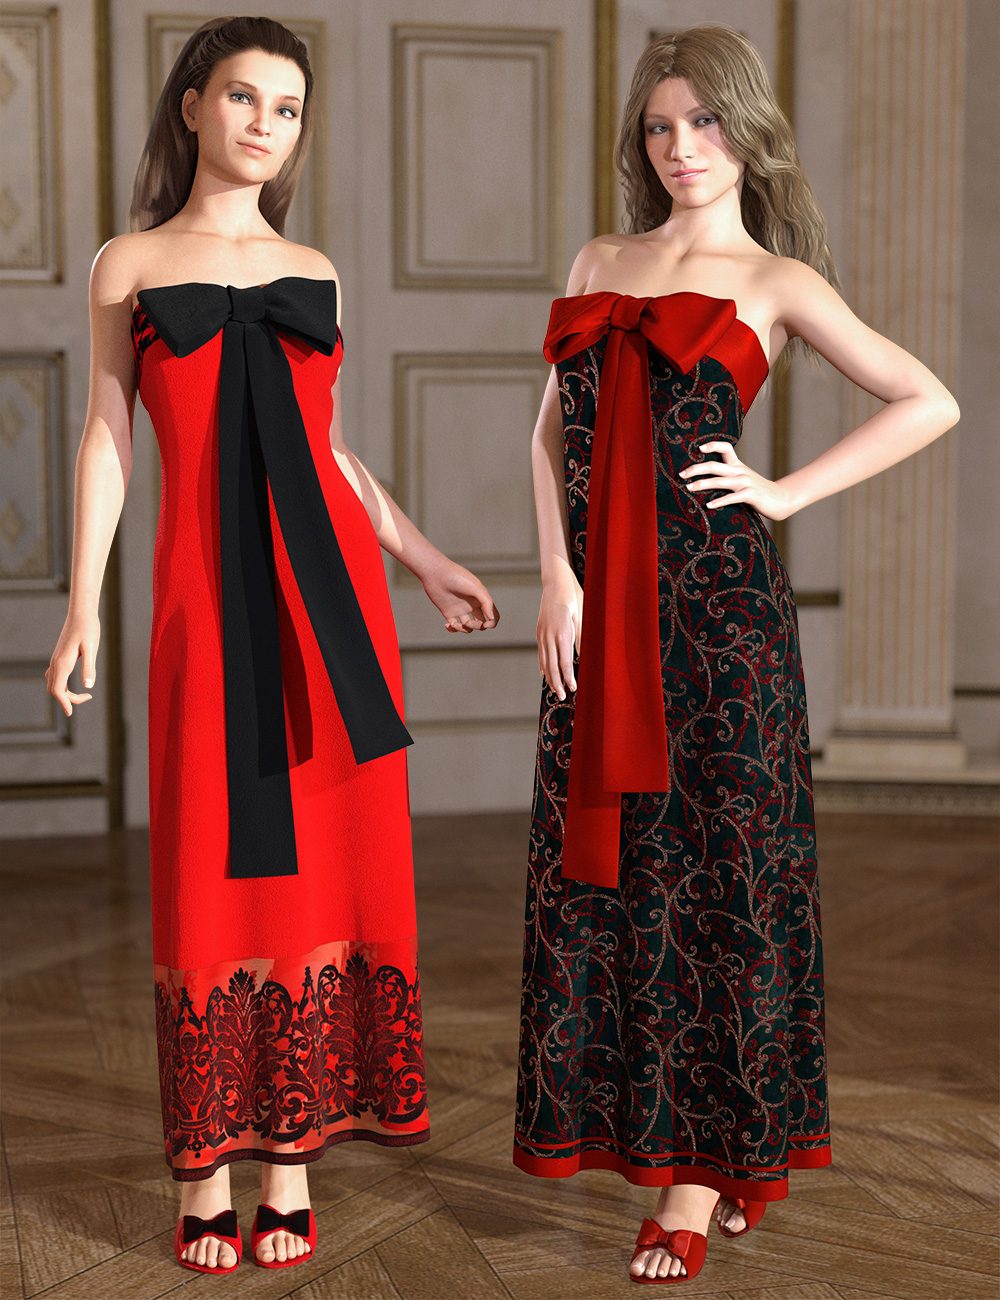 dForce Bow Dress Texture Add-On by: esha, 3D Models by Daz 3D